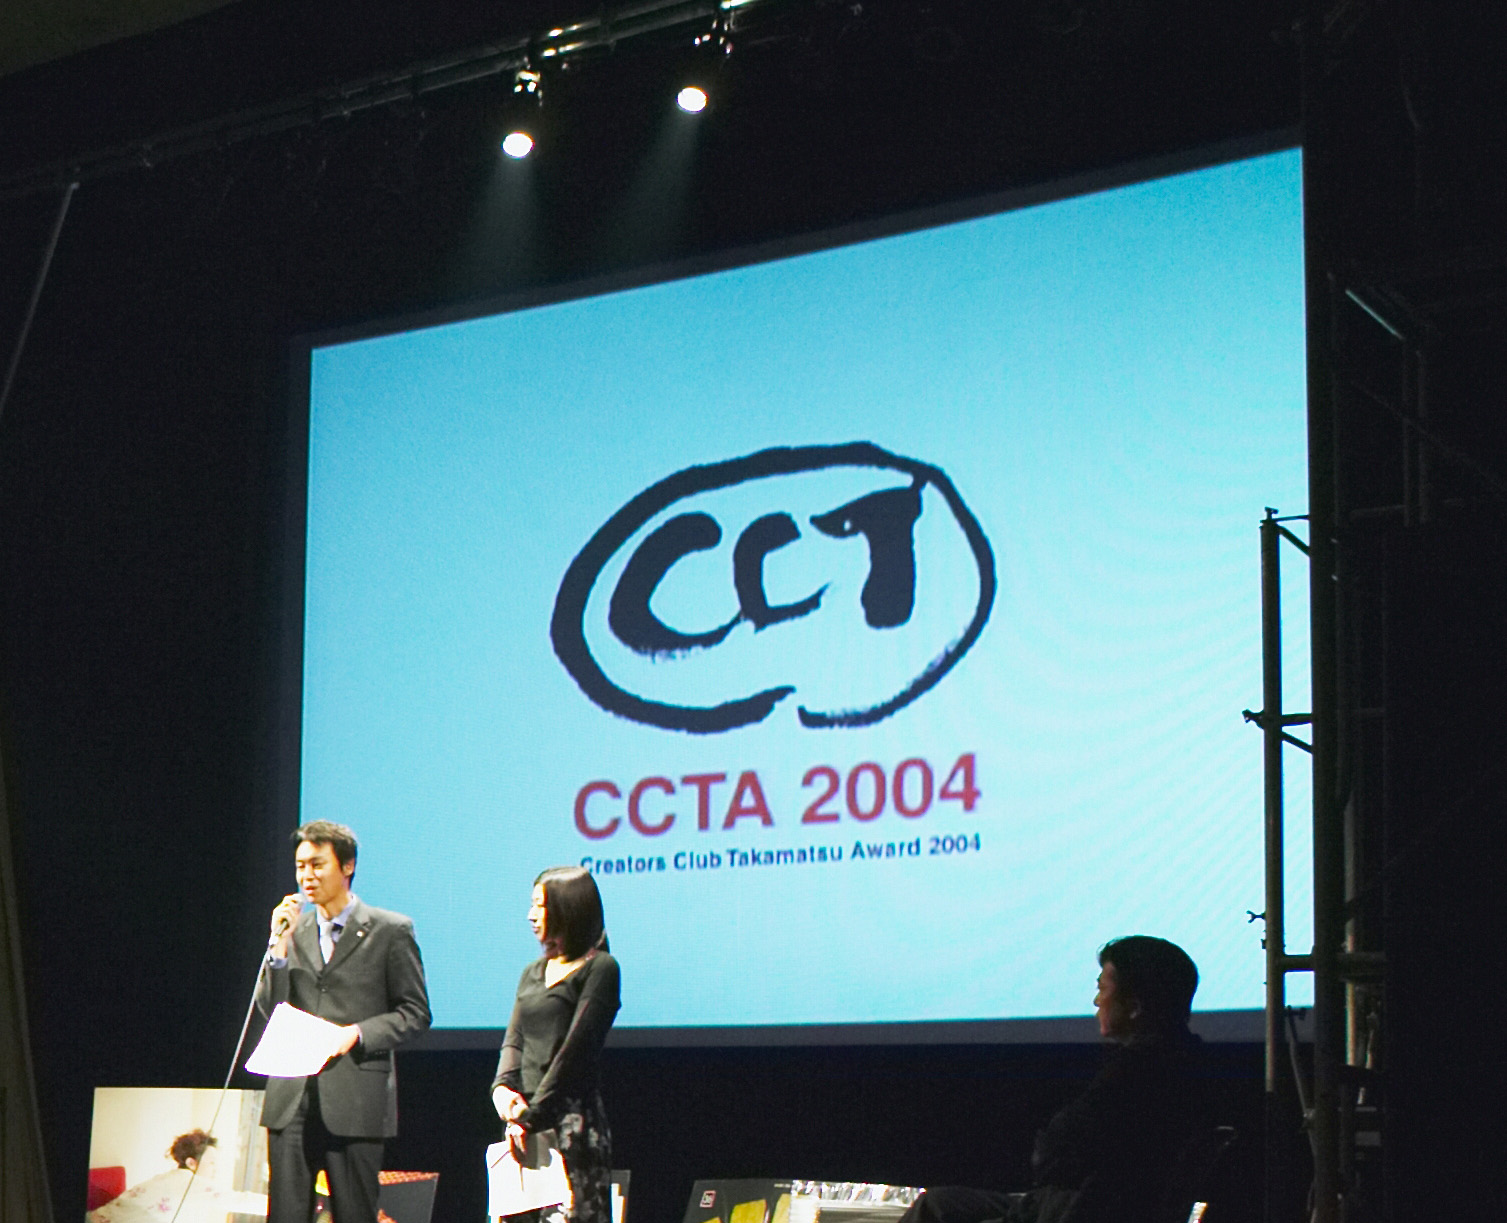 CCT AWARD 2004